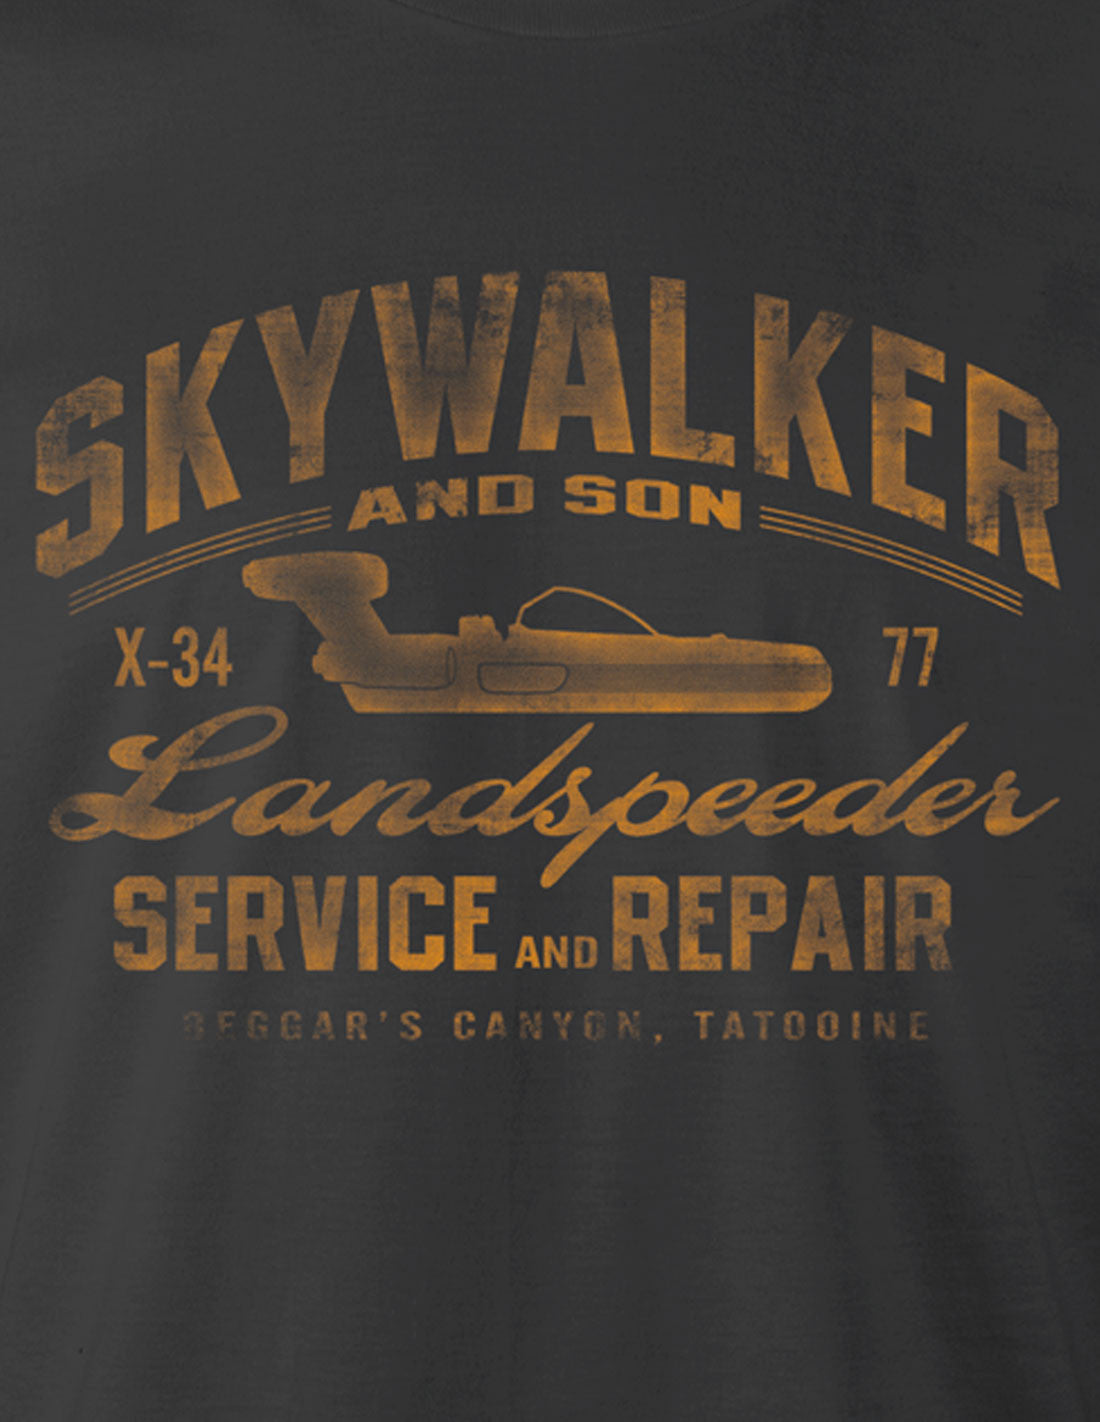 Star Wars T-shirt - Skywalker Landspeeder Repair